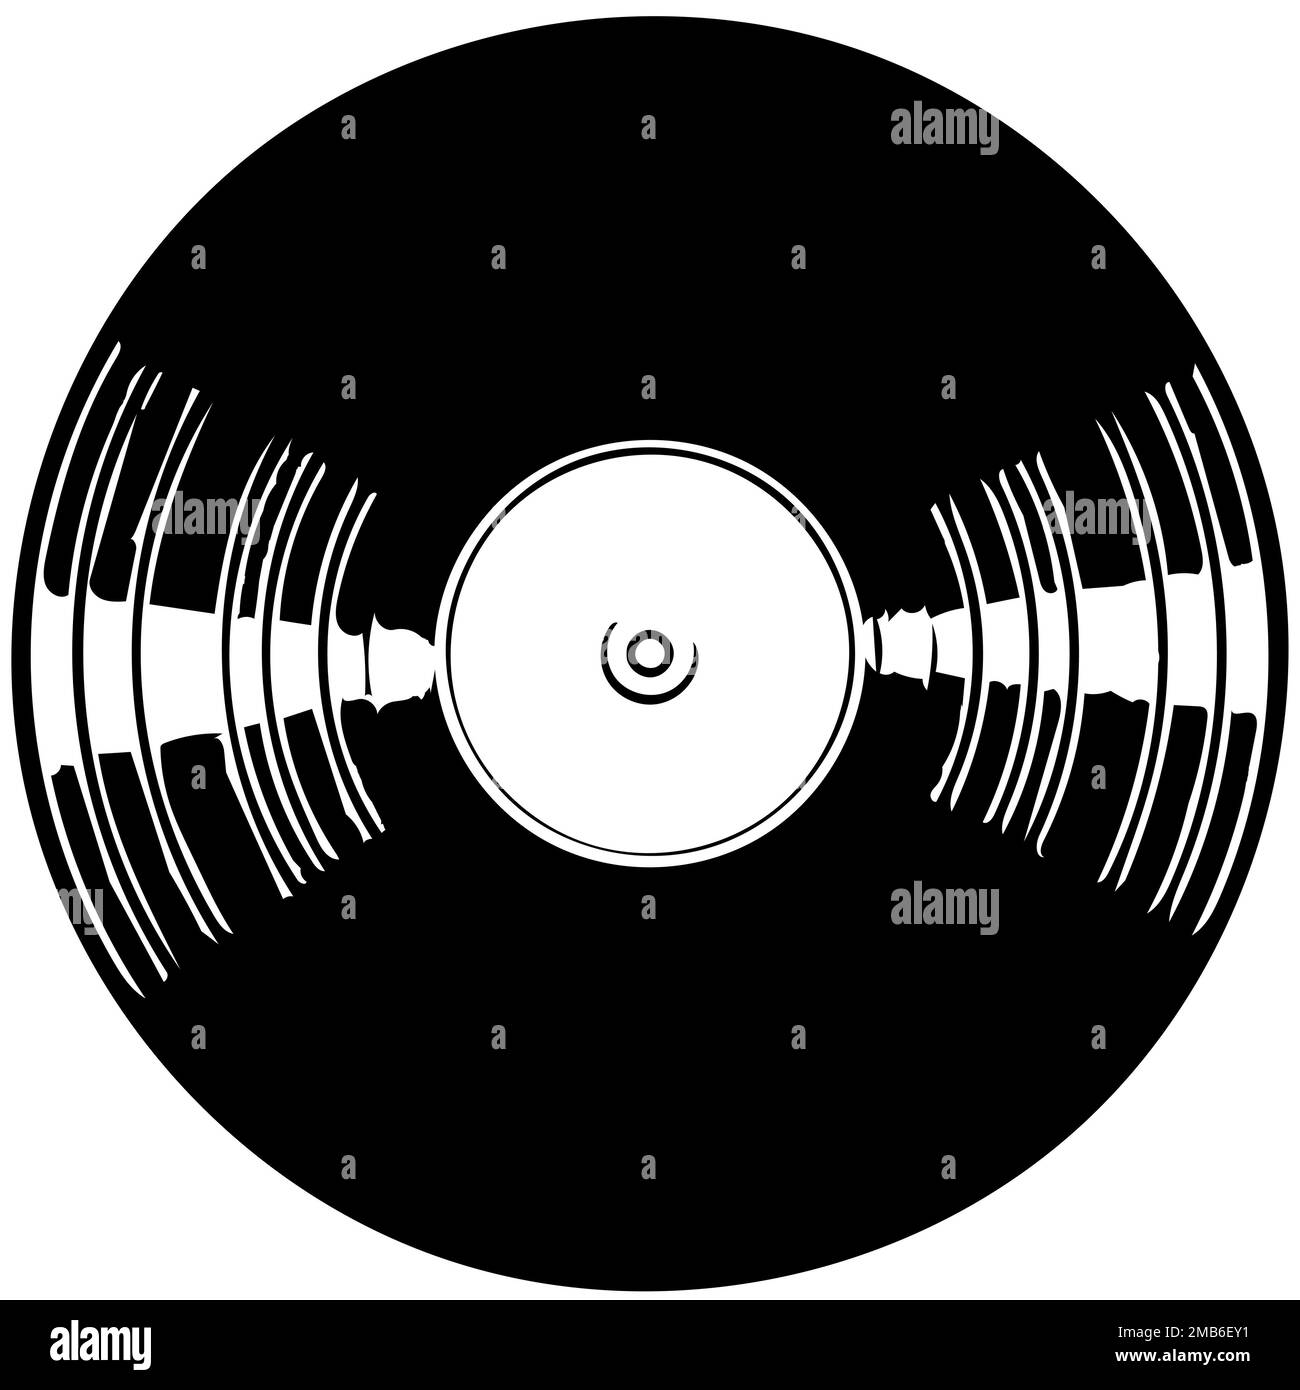 Vinyl Record Sketch Design Vector Format Stock Vector Royalty Free  1431947495  Shutterstock